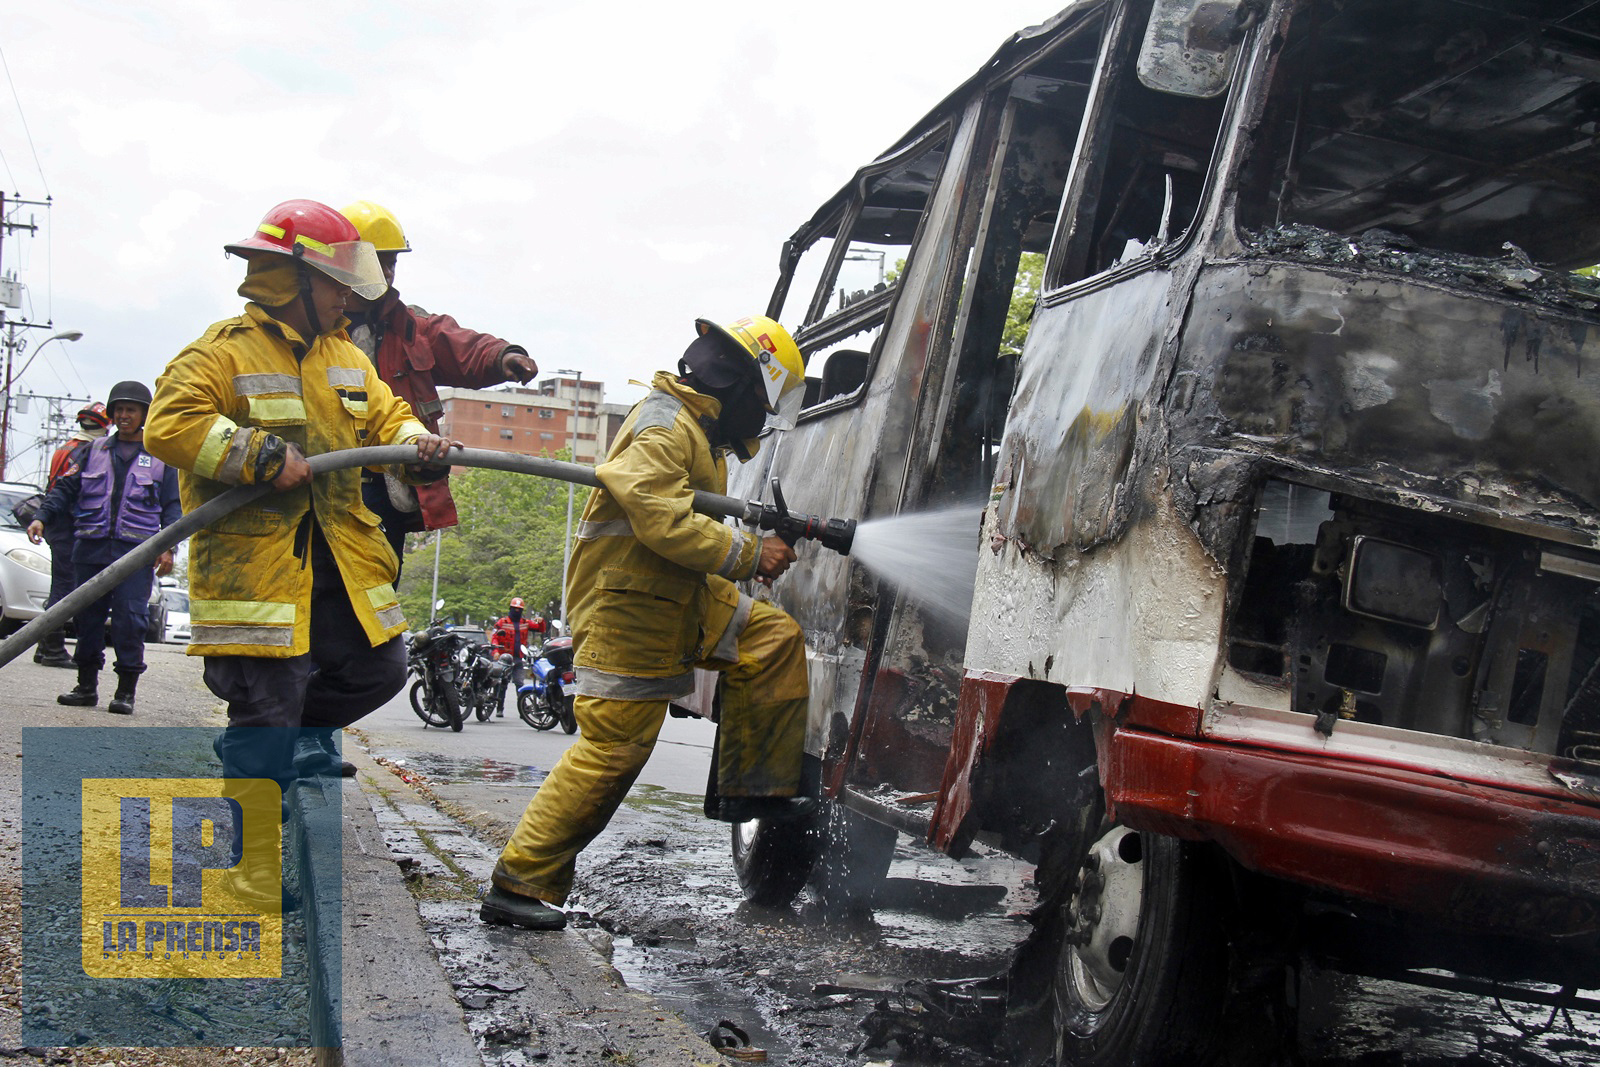 Incendio de autobús en la Libertador dejó al chofer herido